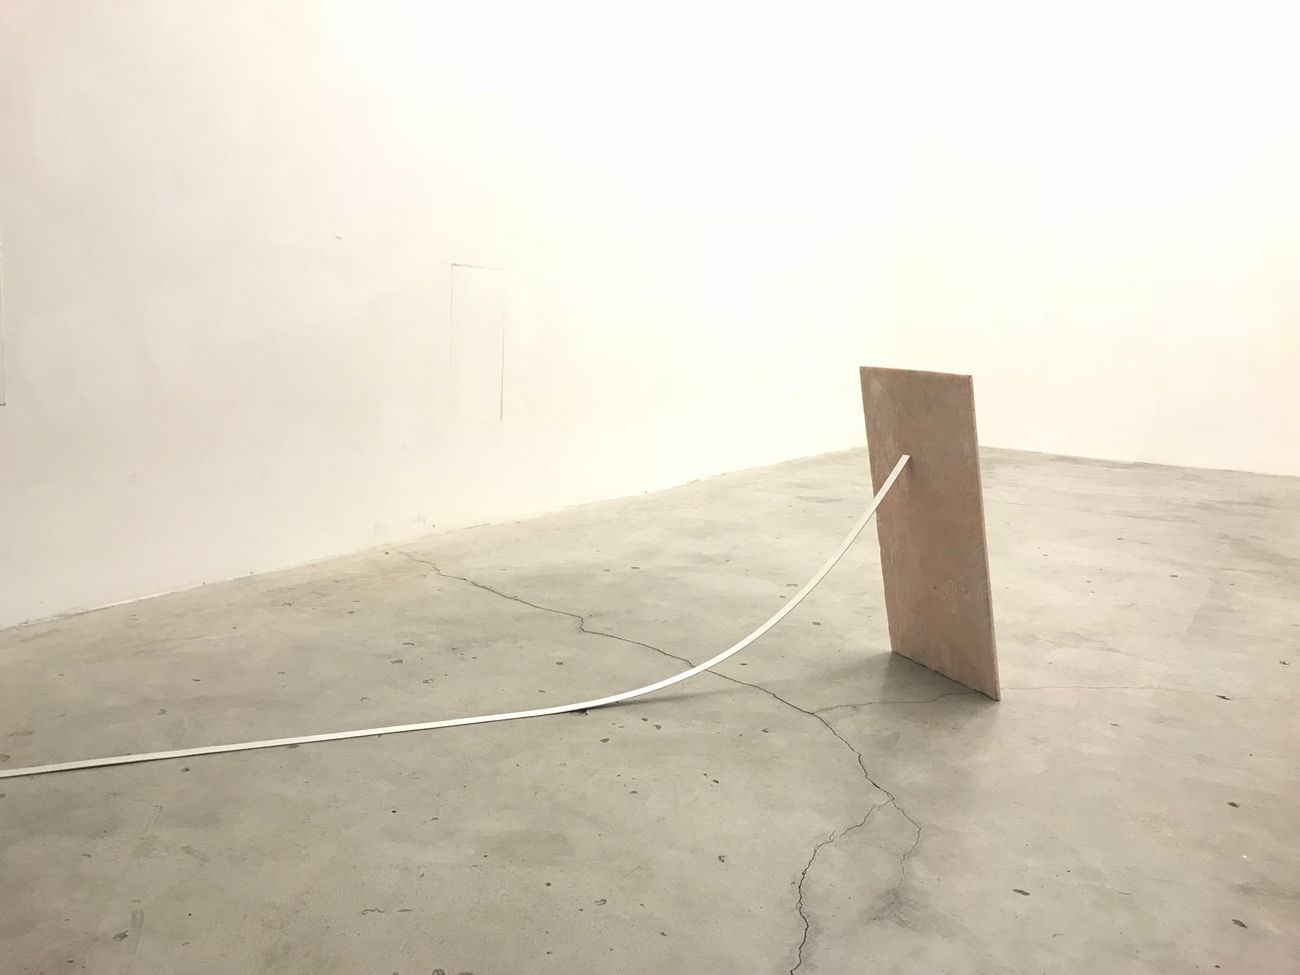 Niccolò De Napoli. Verge of collapse. Exhibition view at Localedue, Bologna 2018